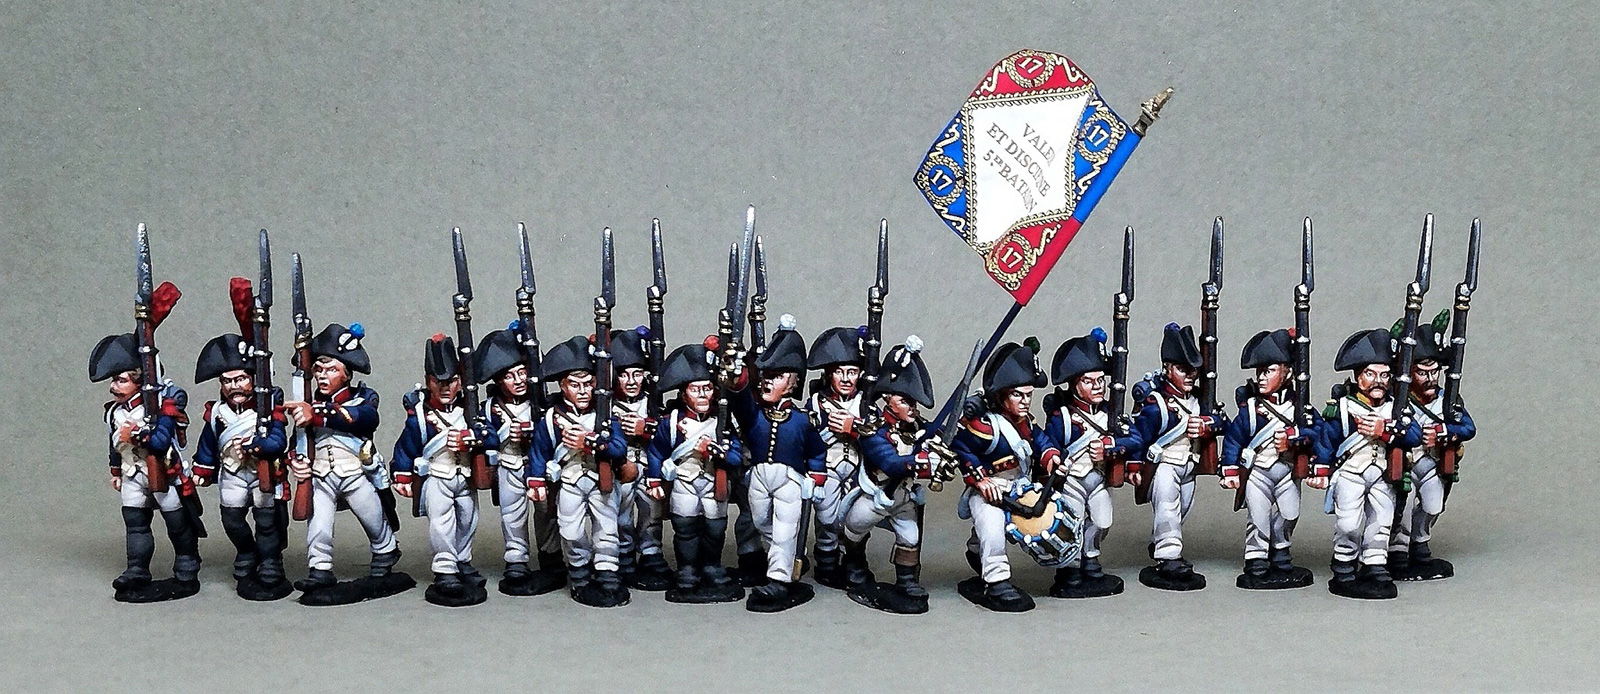 Figures: French army, Napoleonic era, photo #1